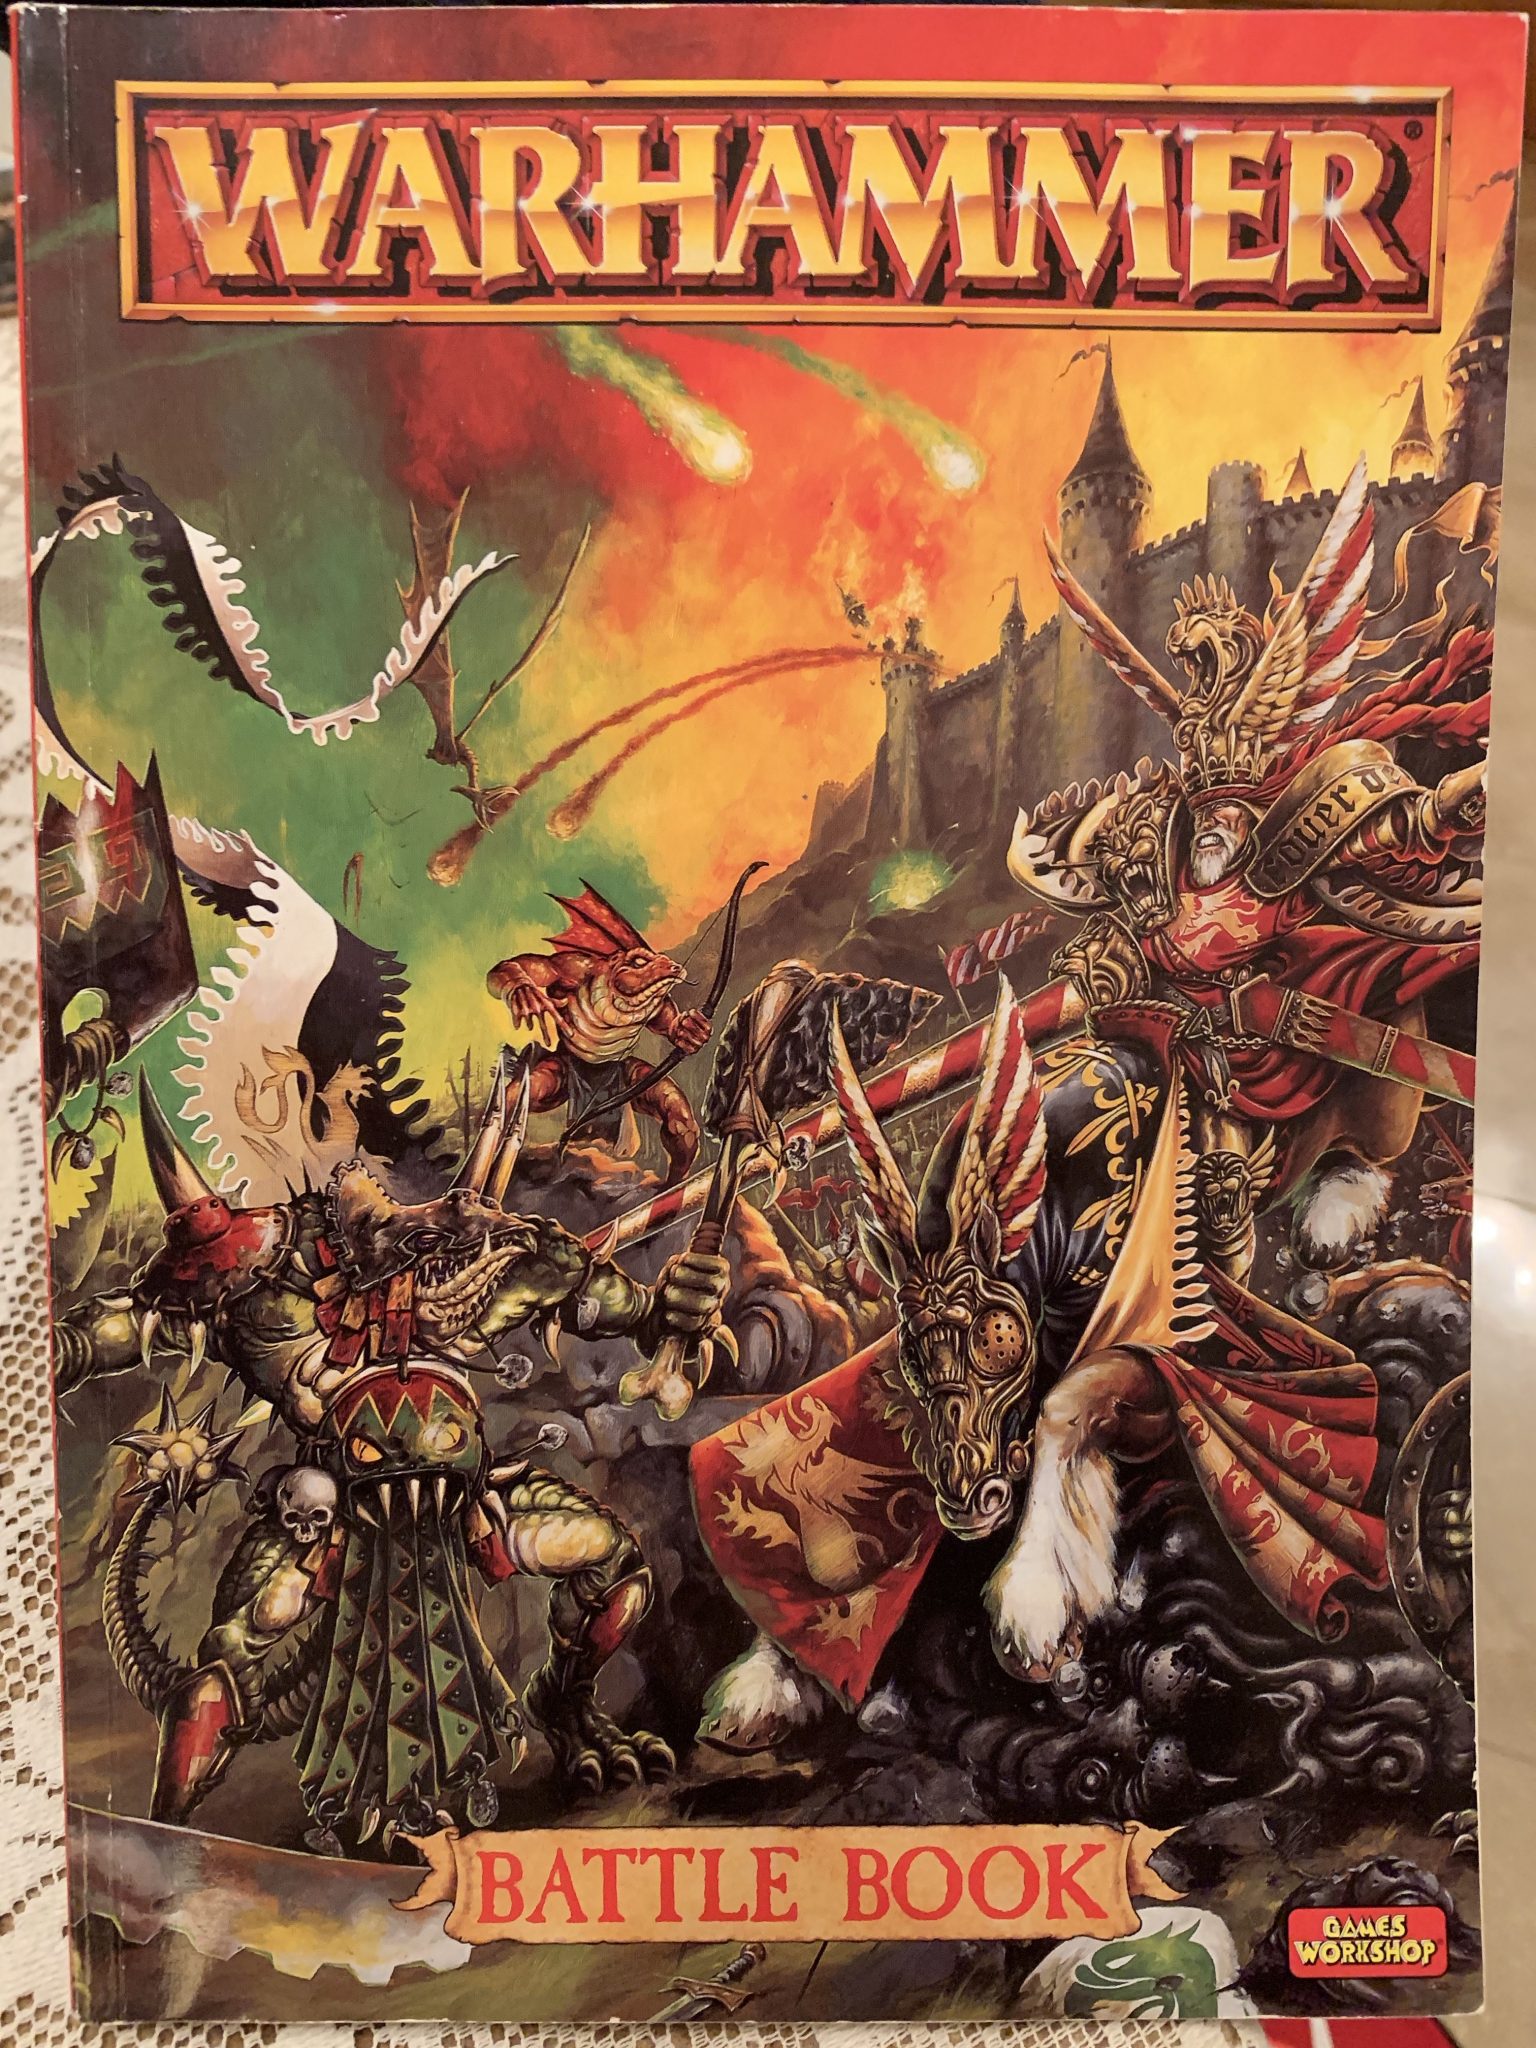 Battle book. Warhammer Fantasy Battles Rulebook. Книги вархаммер фэнтези. Warhammer Fantasy Battles book. 5 Edition Warhammer Fantasy.